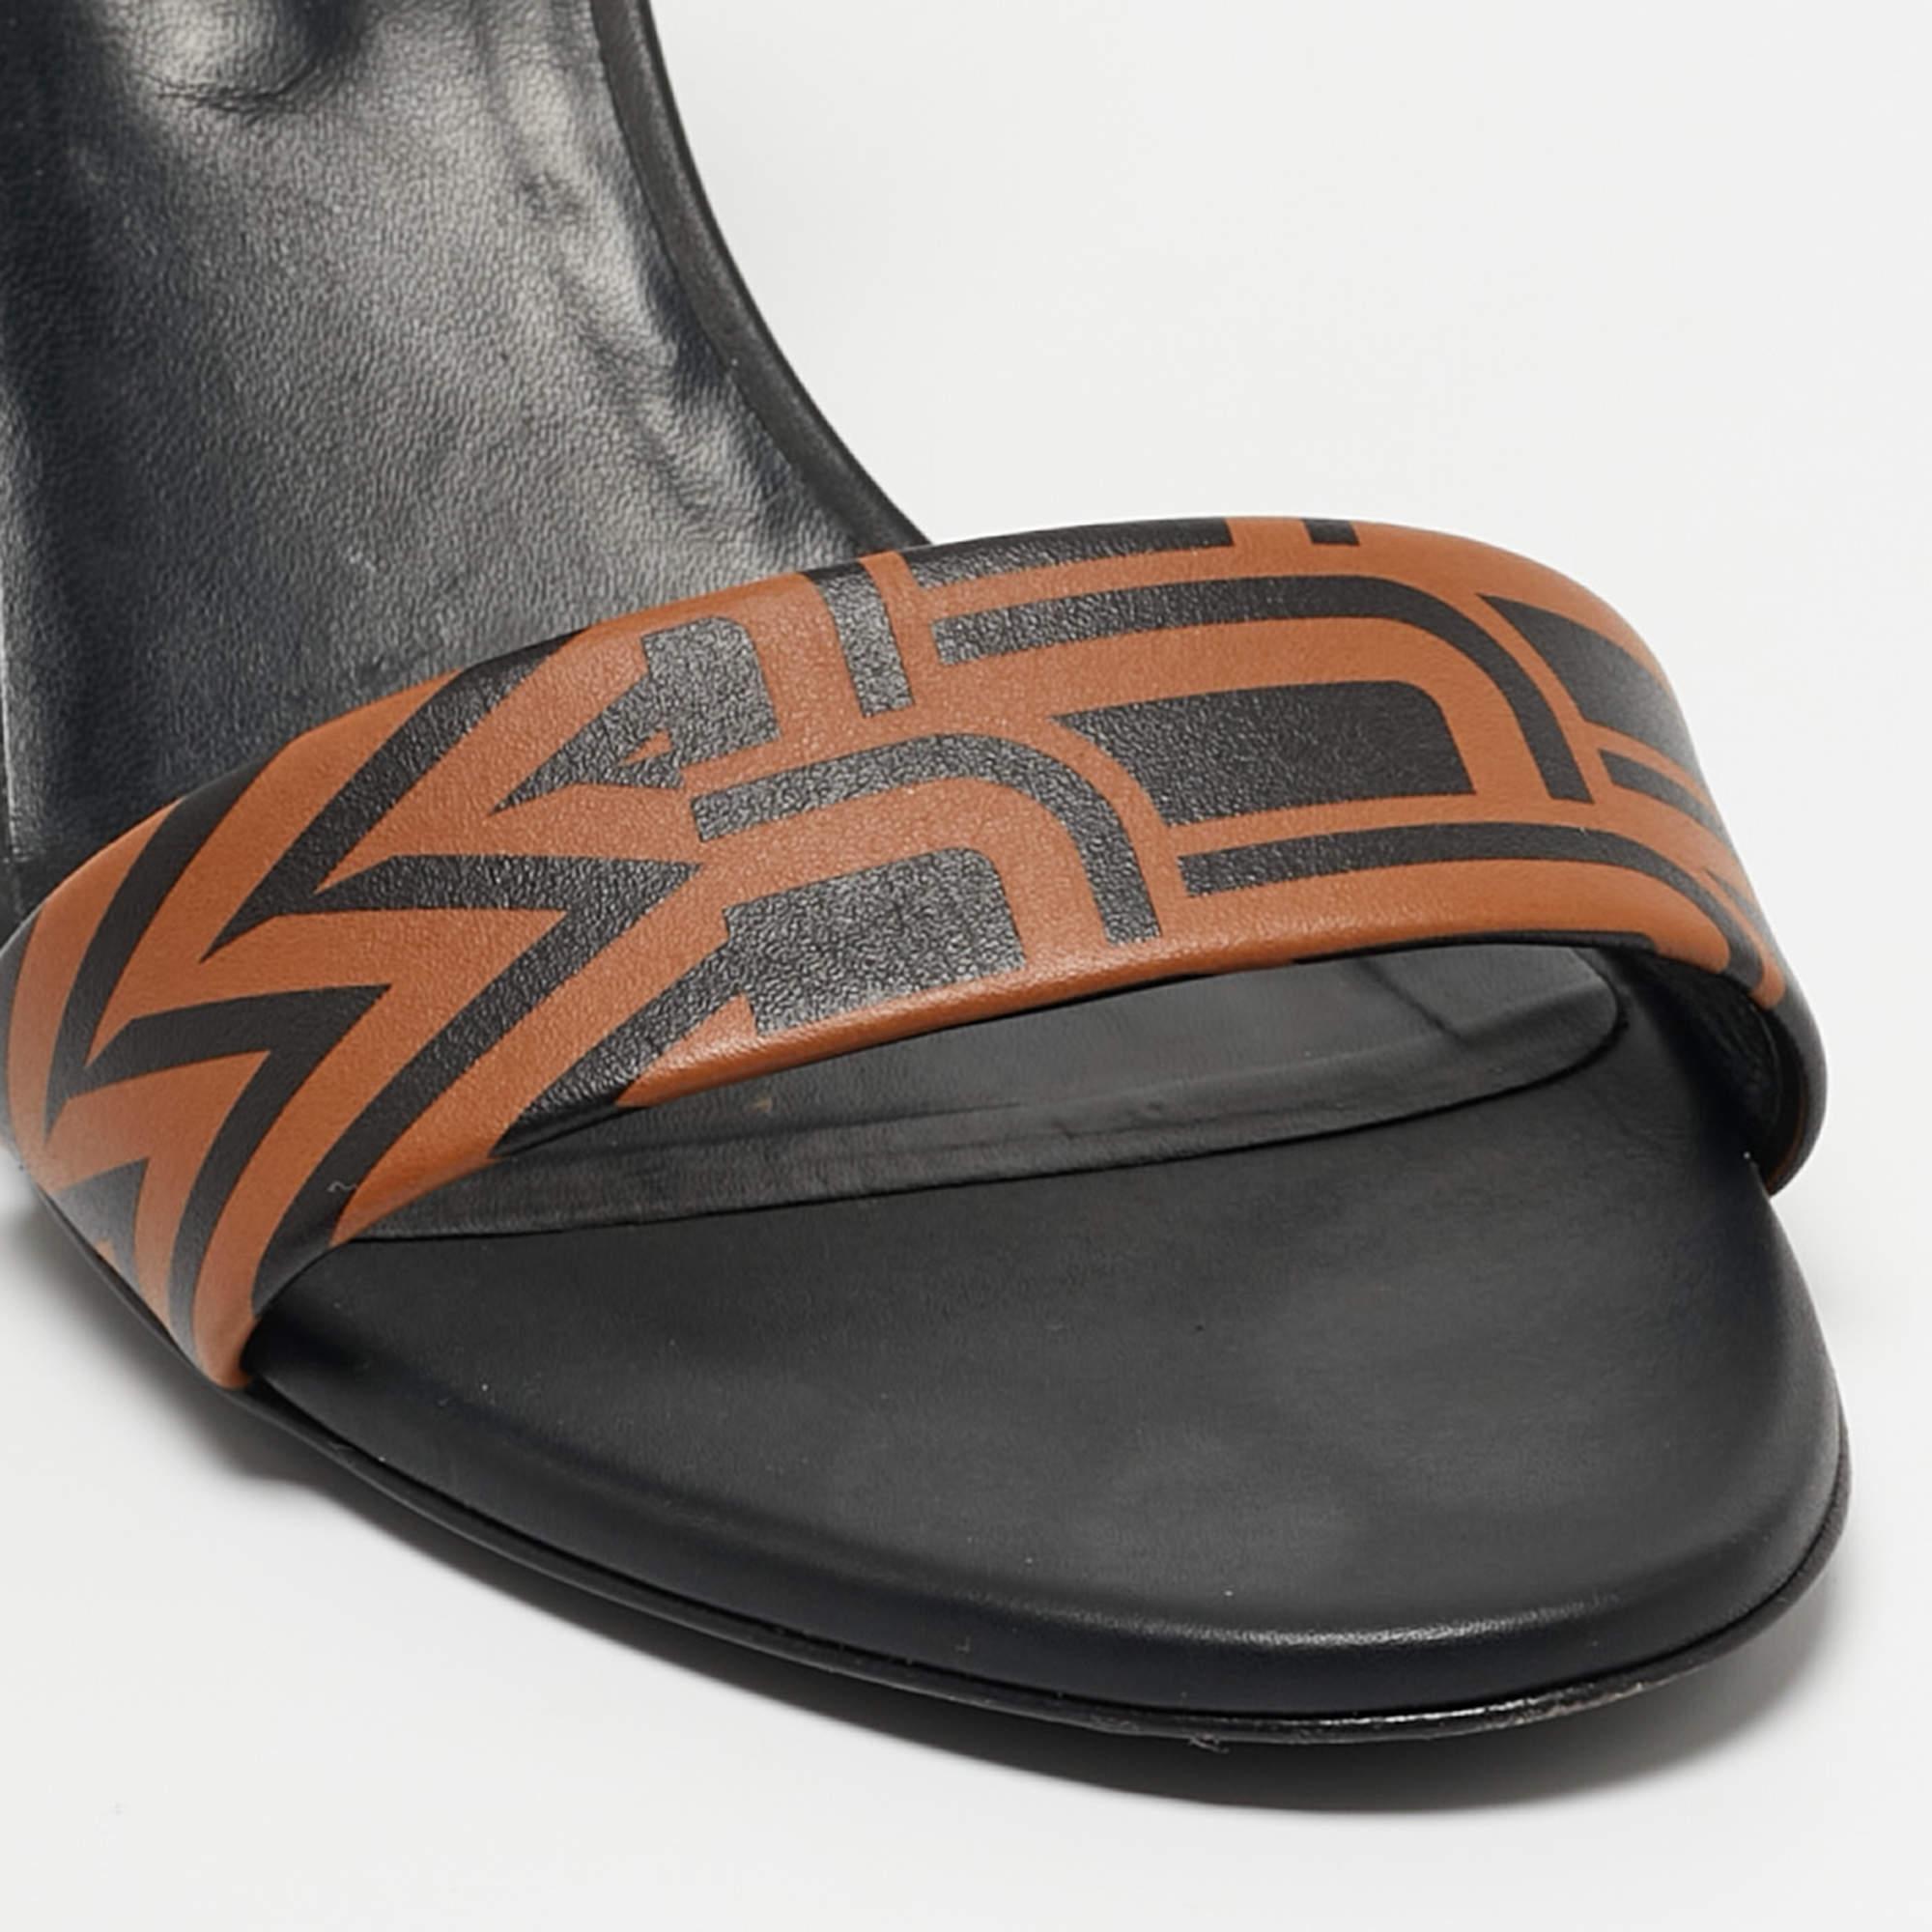 Hermes Black/Brown Printed Leather Acapulco Wedge Sandals Size 40 1